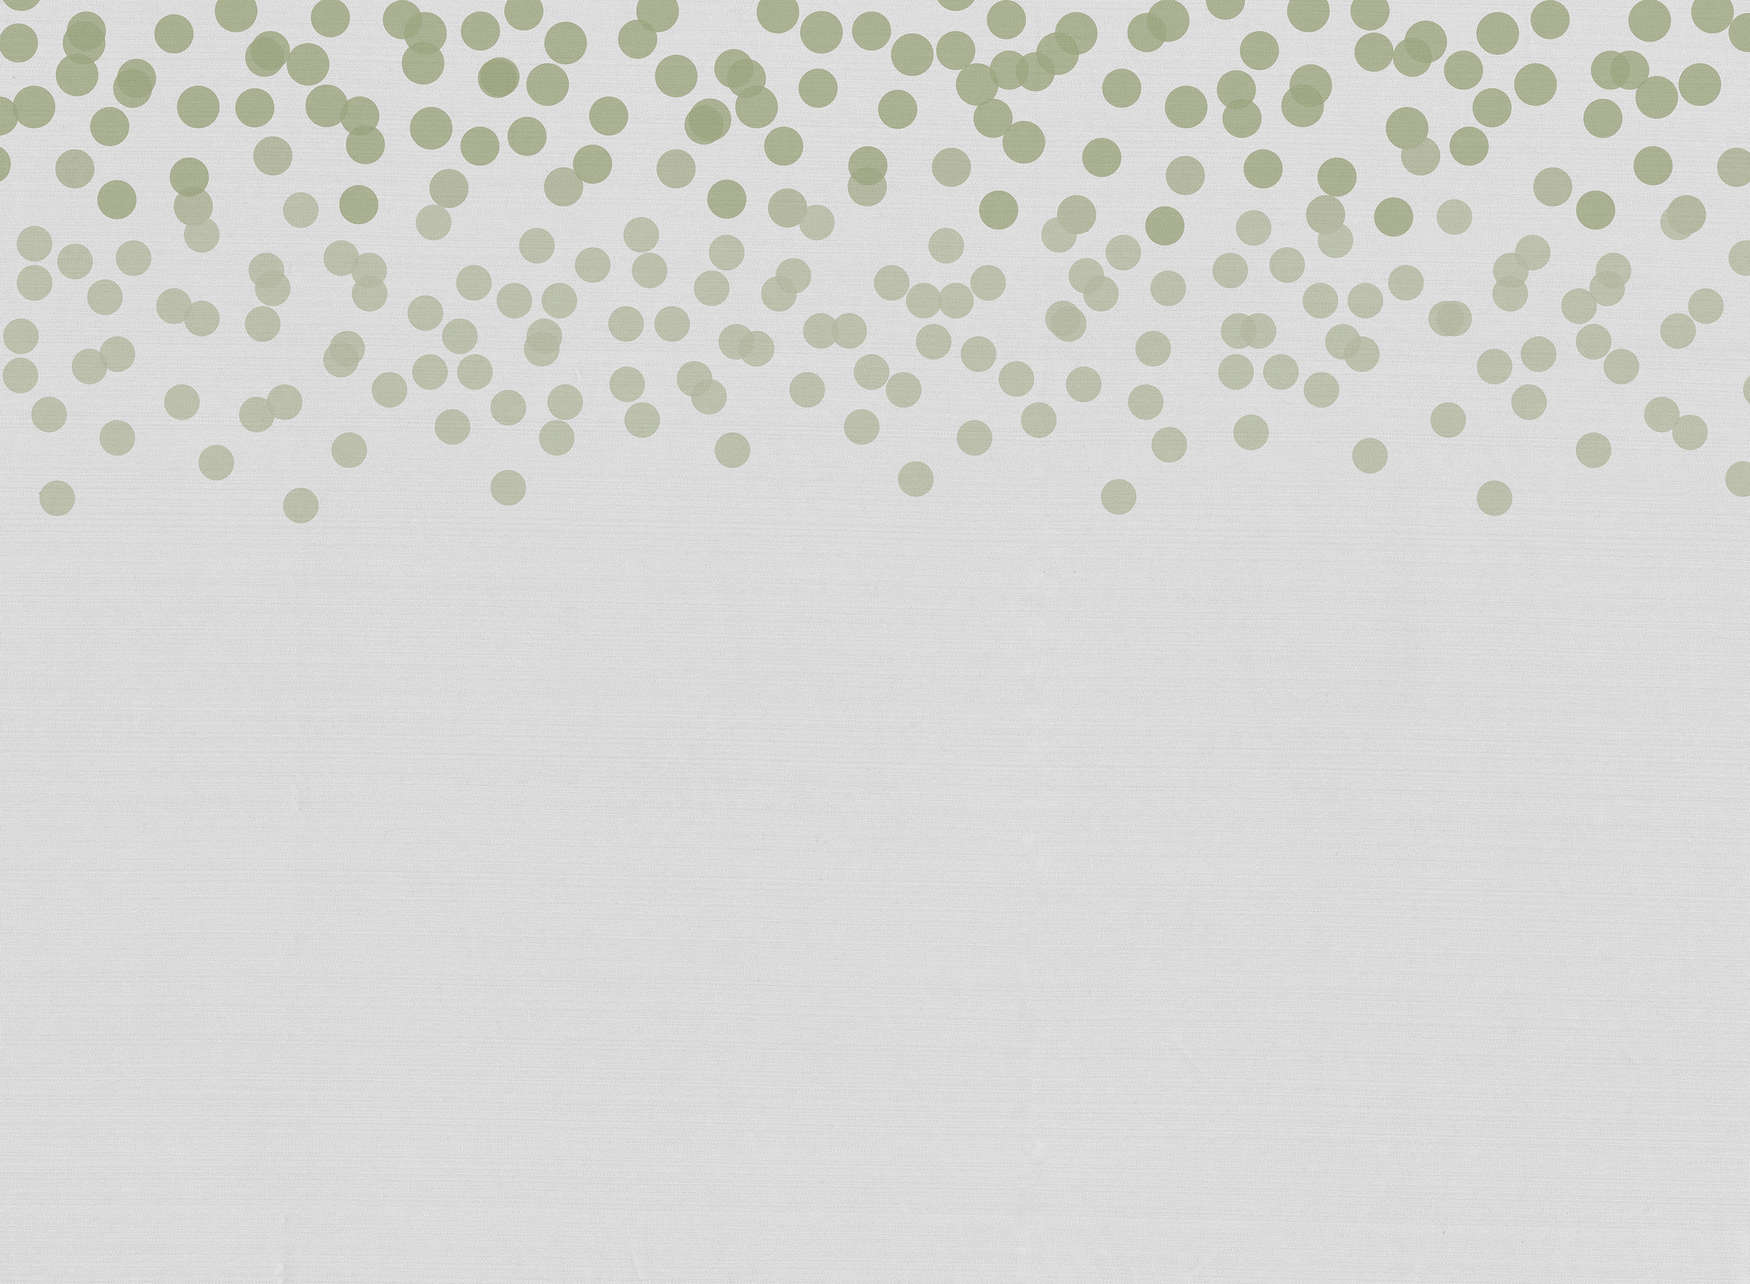             Fototapete mit dezenten Punkt-Muster – Grün, Grau
        